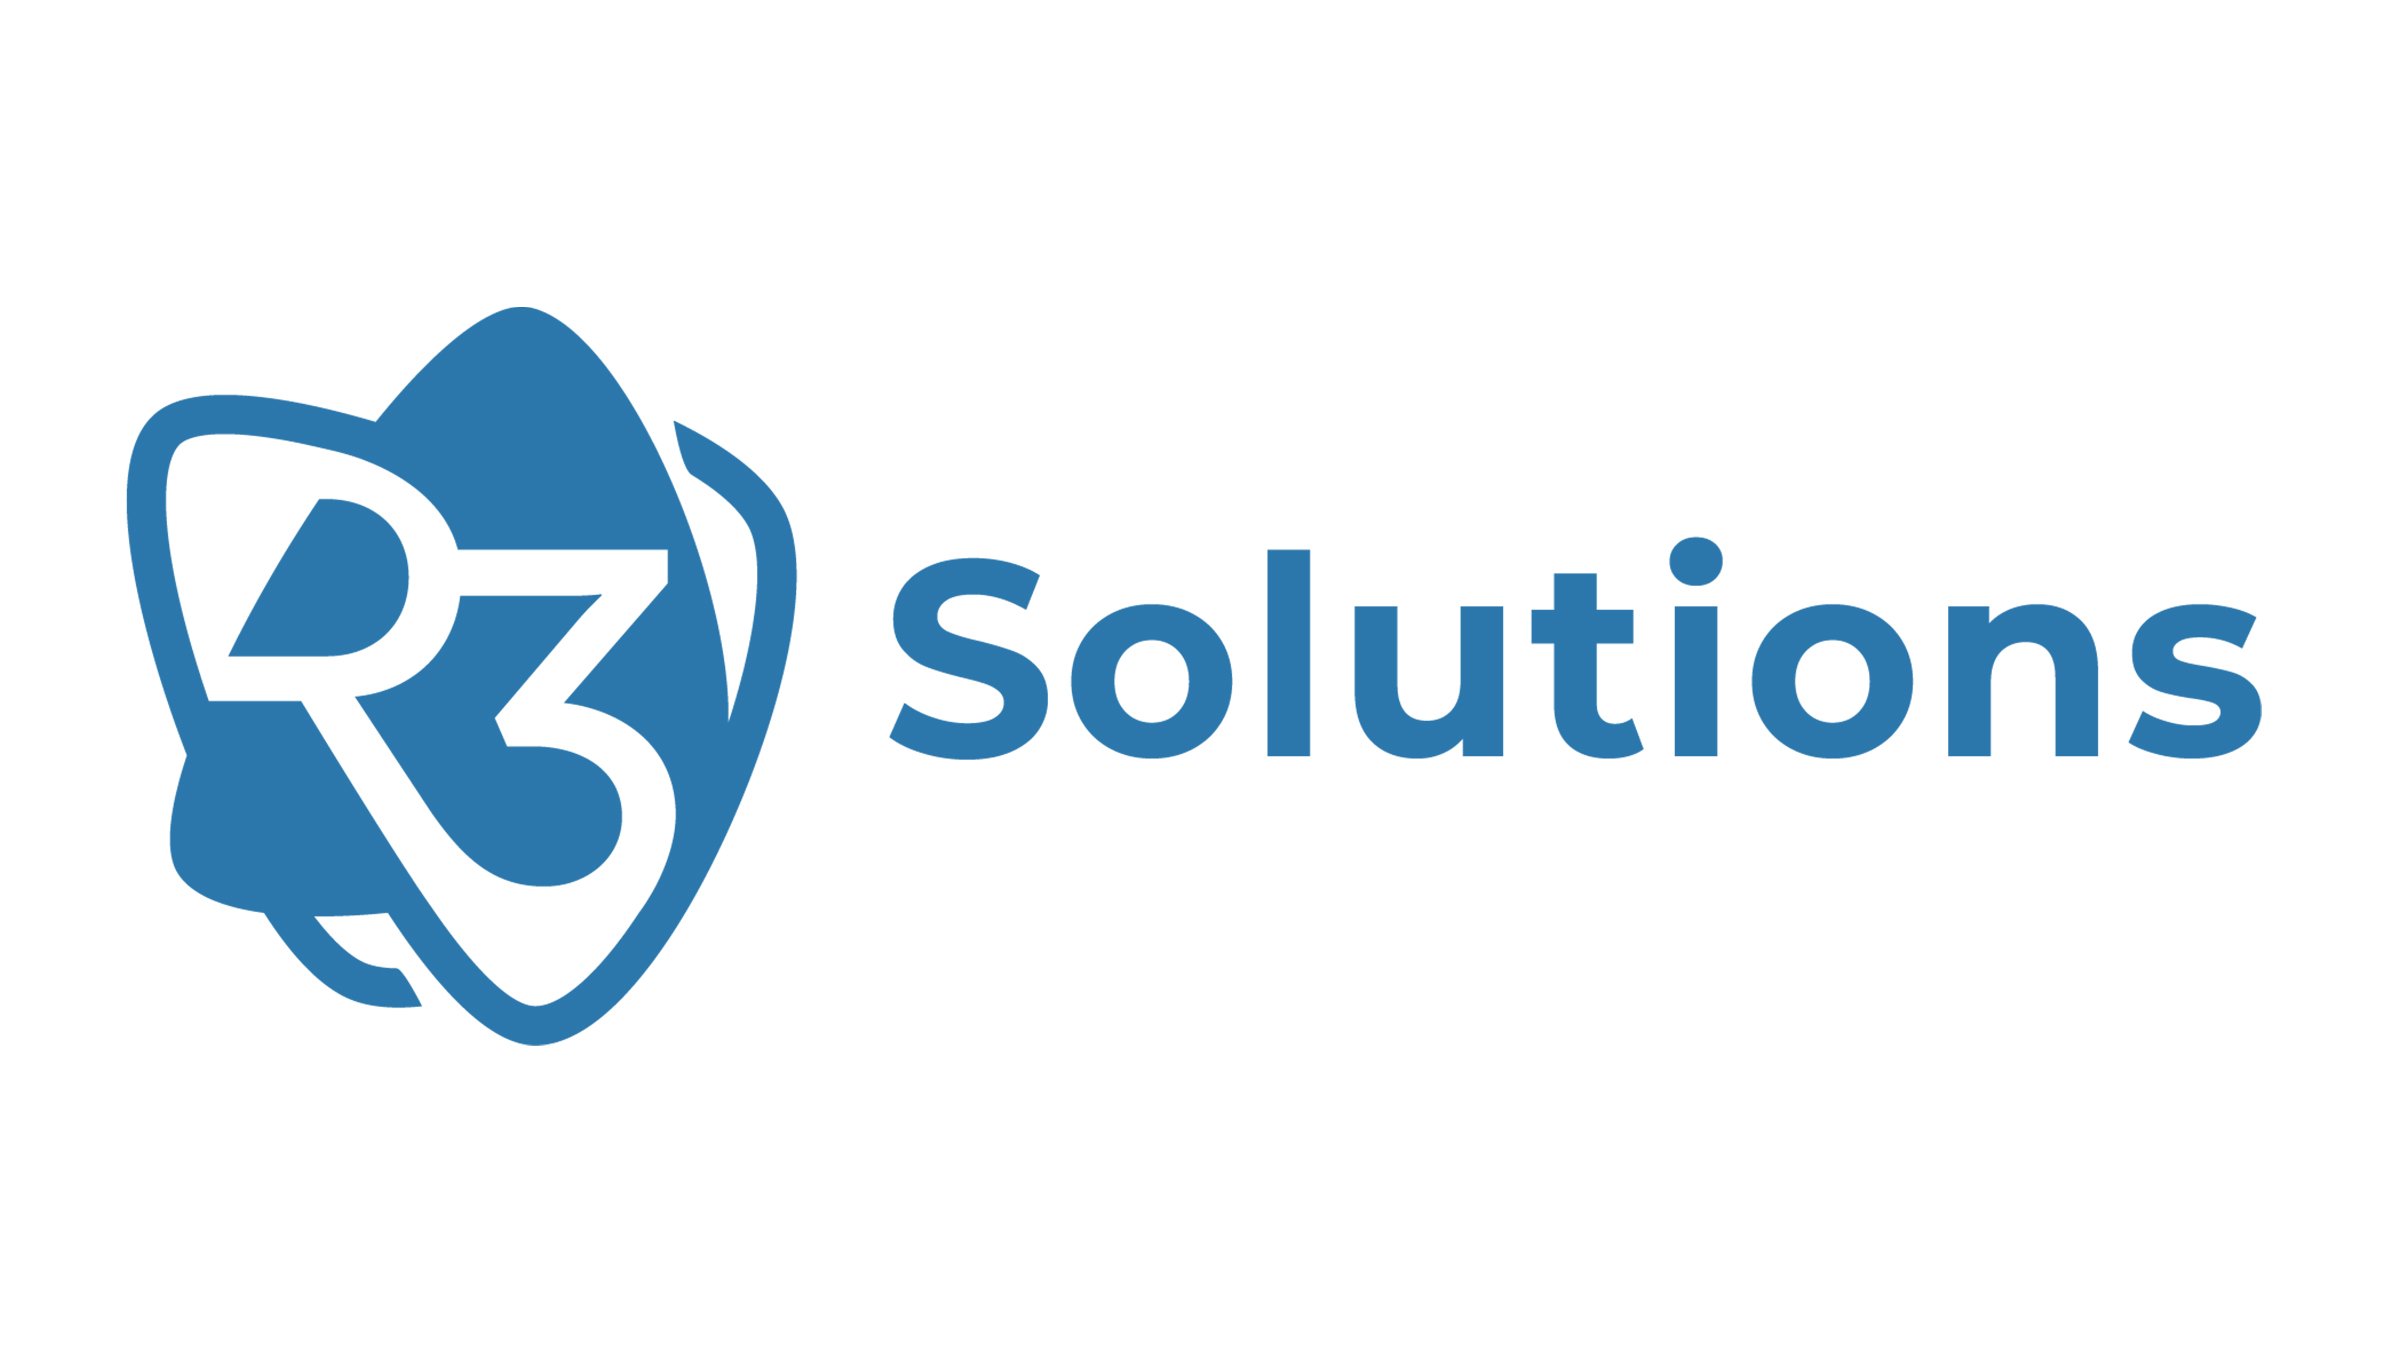 R3 Solutions company logo